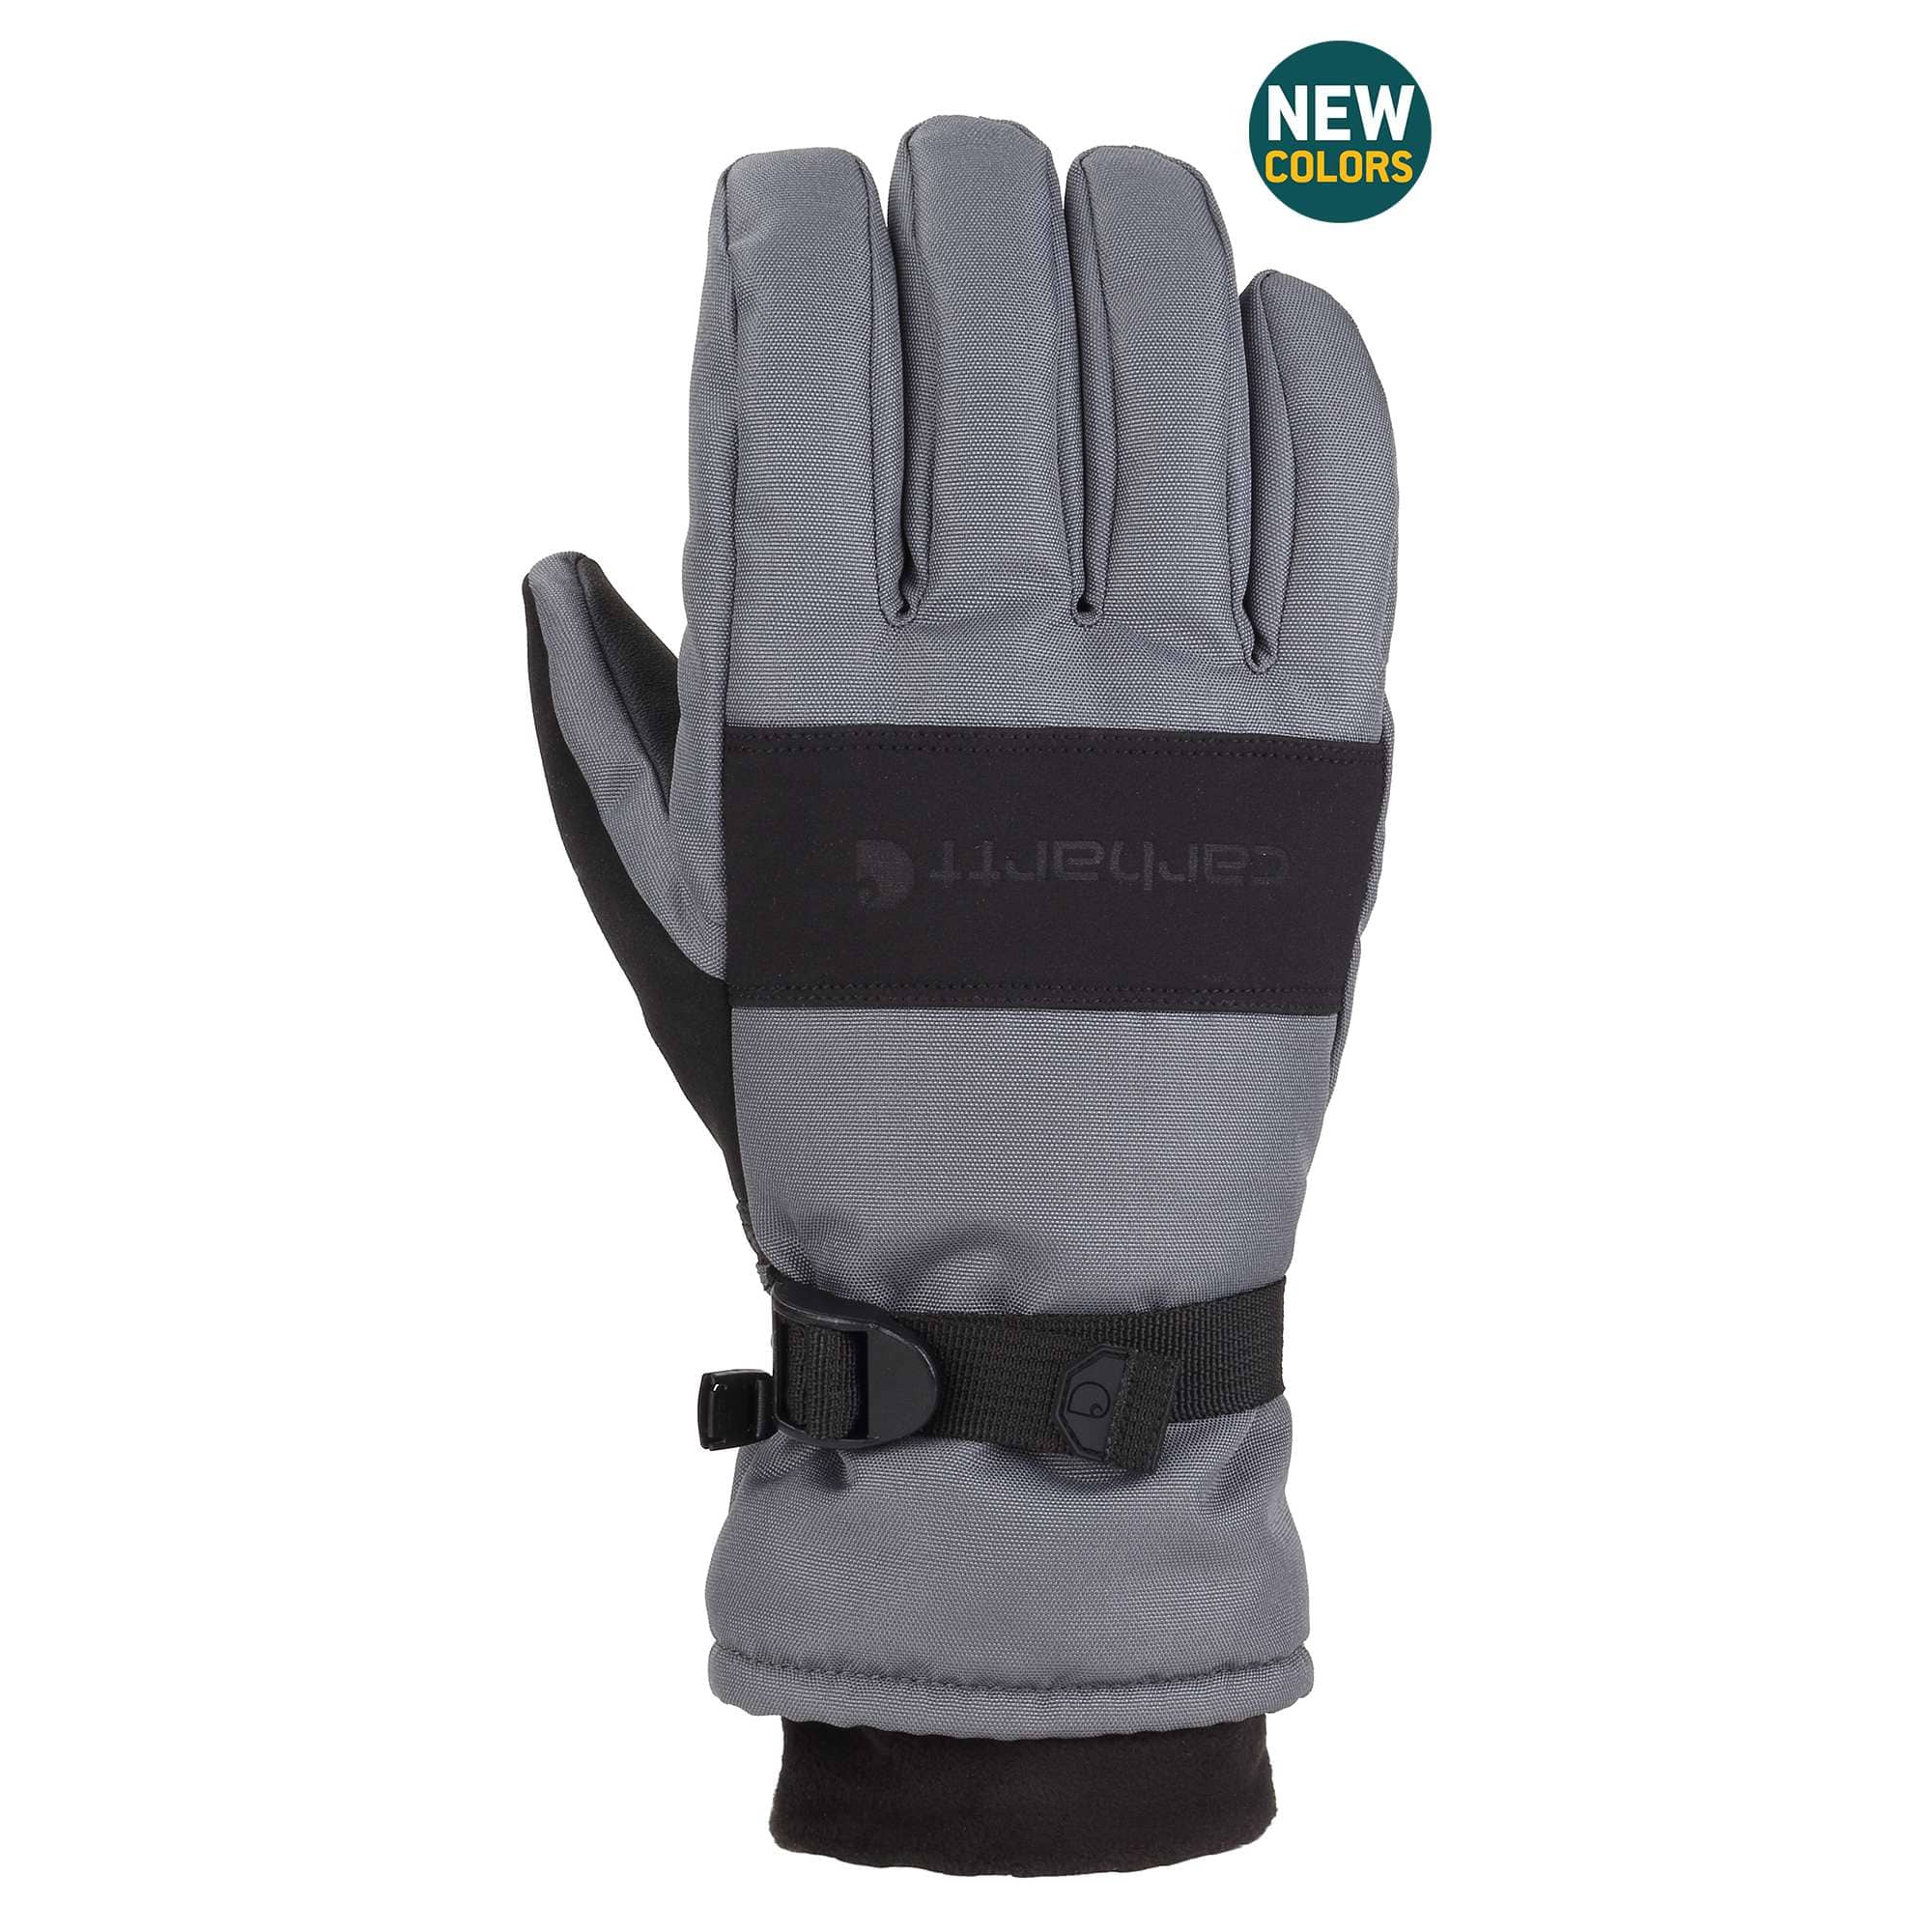 men's insulated winter gloves